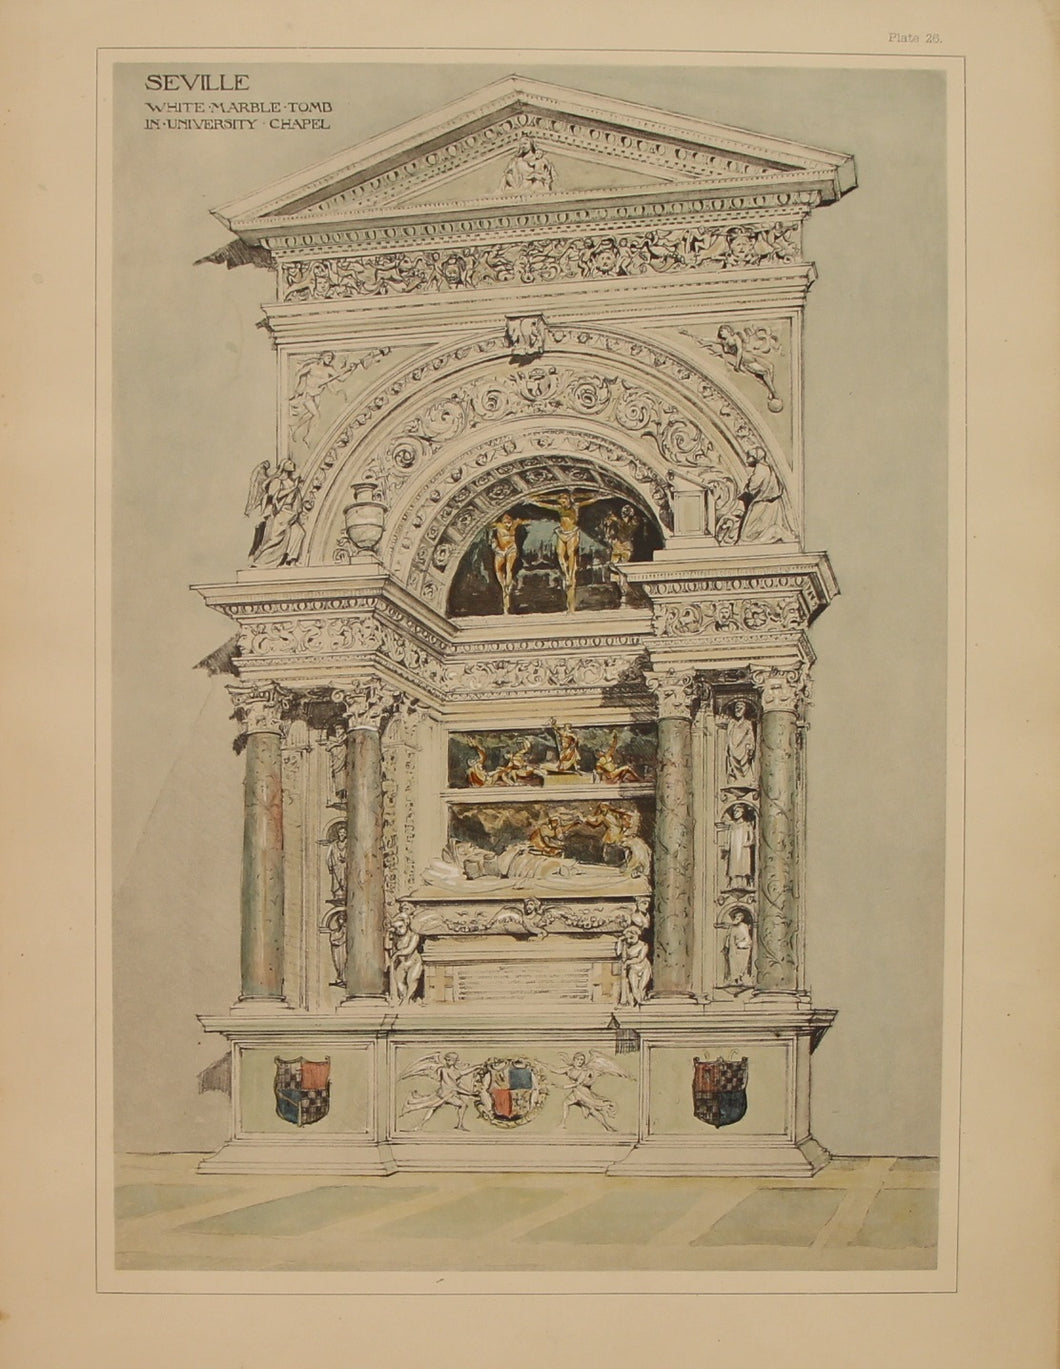 Architecture, Spanish Renaissance, Plate 26,  White Marble Tomb, University Chapel, Seville,